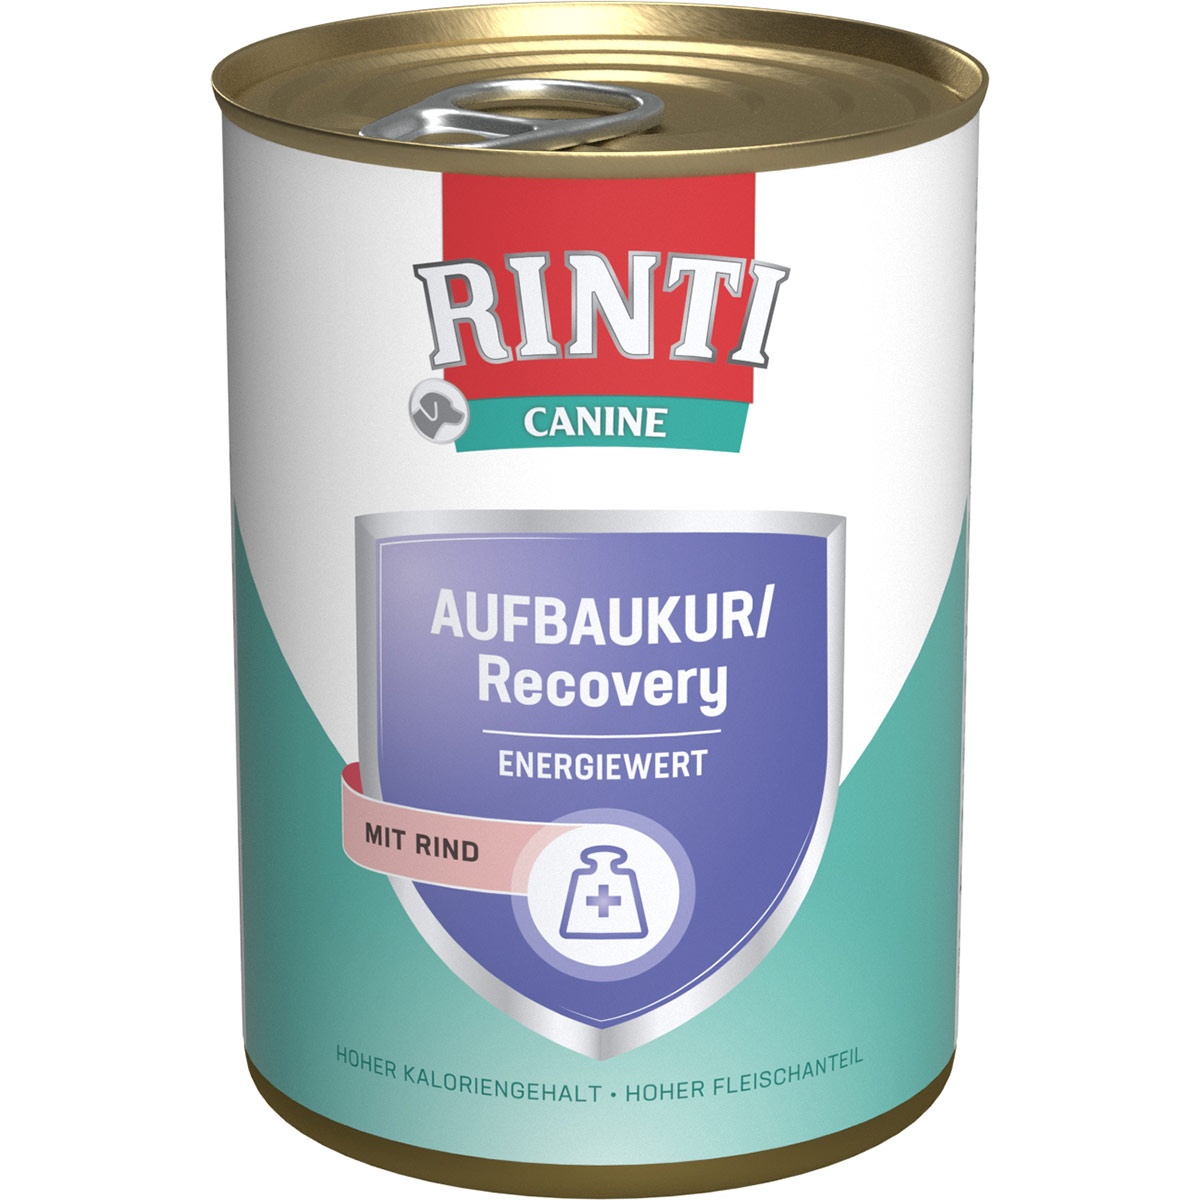 RINTI Canine Aufbaukur/Recovery Rind 6x400g